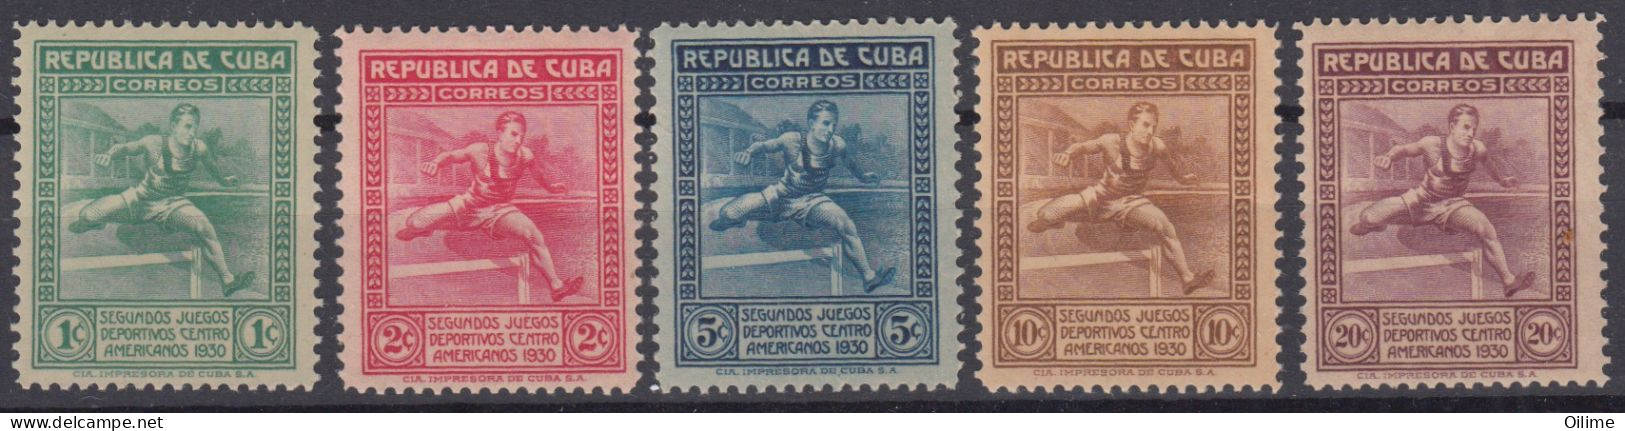 CUBA 1930. II JUEGOS DEPORTIVOS CENTROAMERICANOS. MNH. EDIFIL 239/43 - Ungebraucht